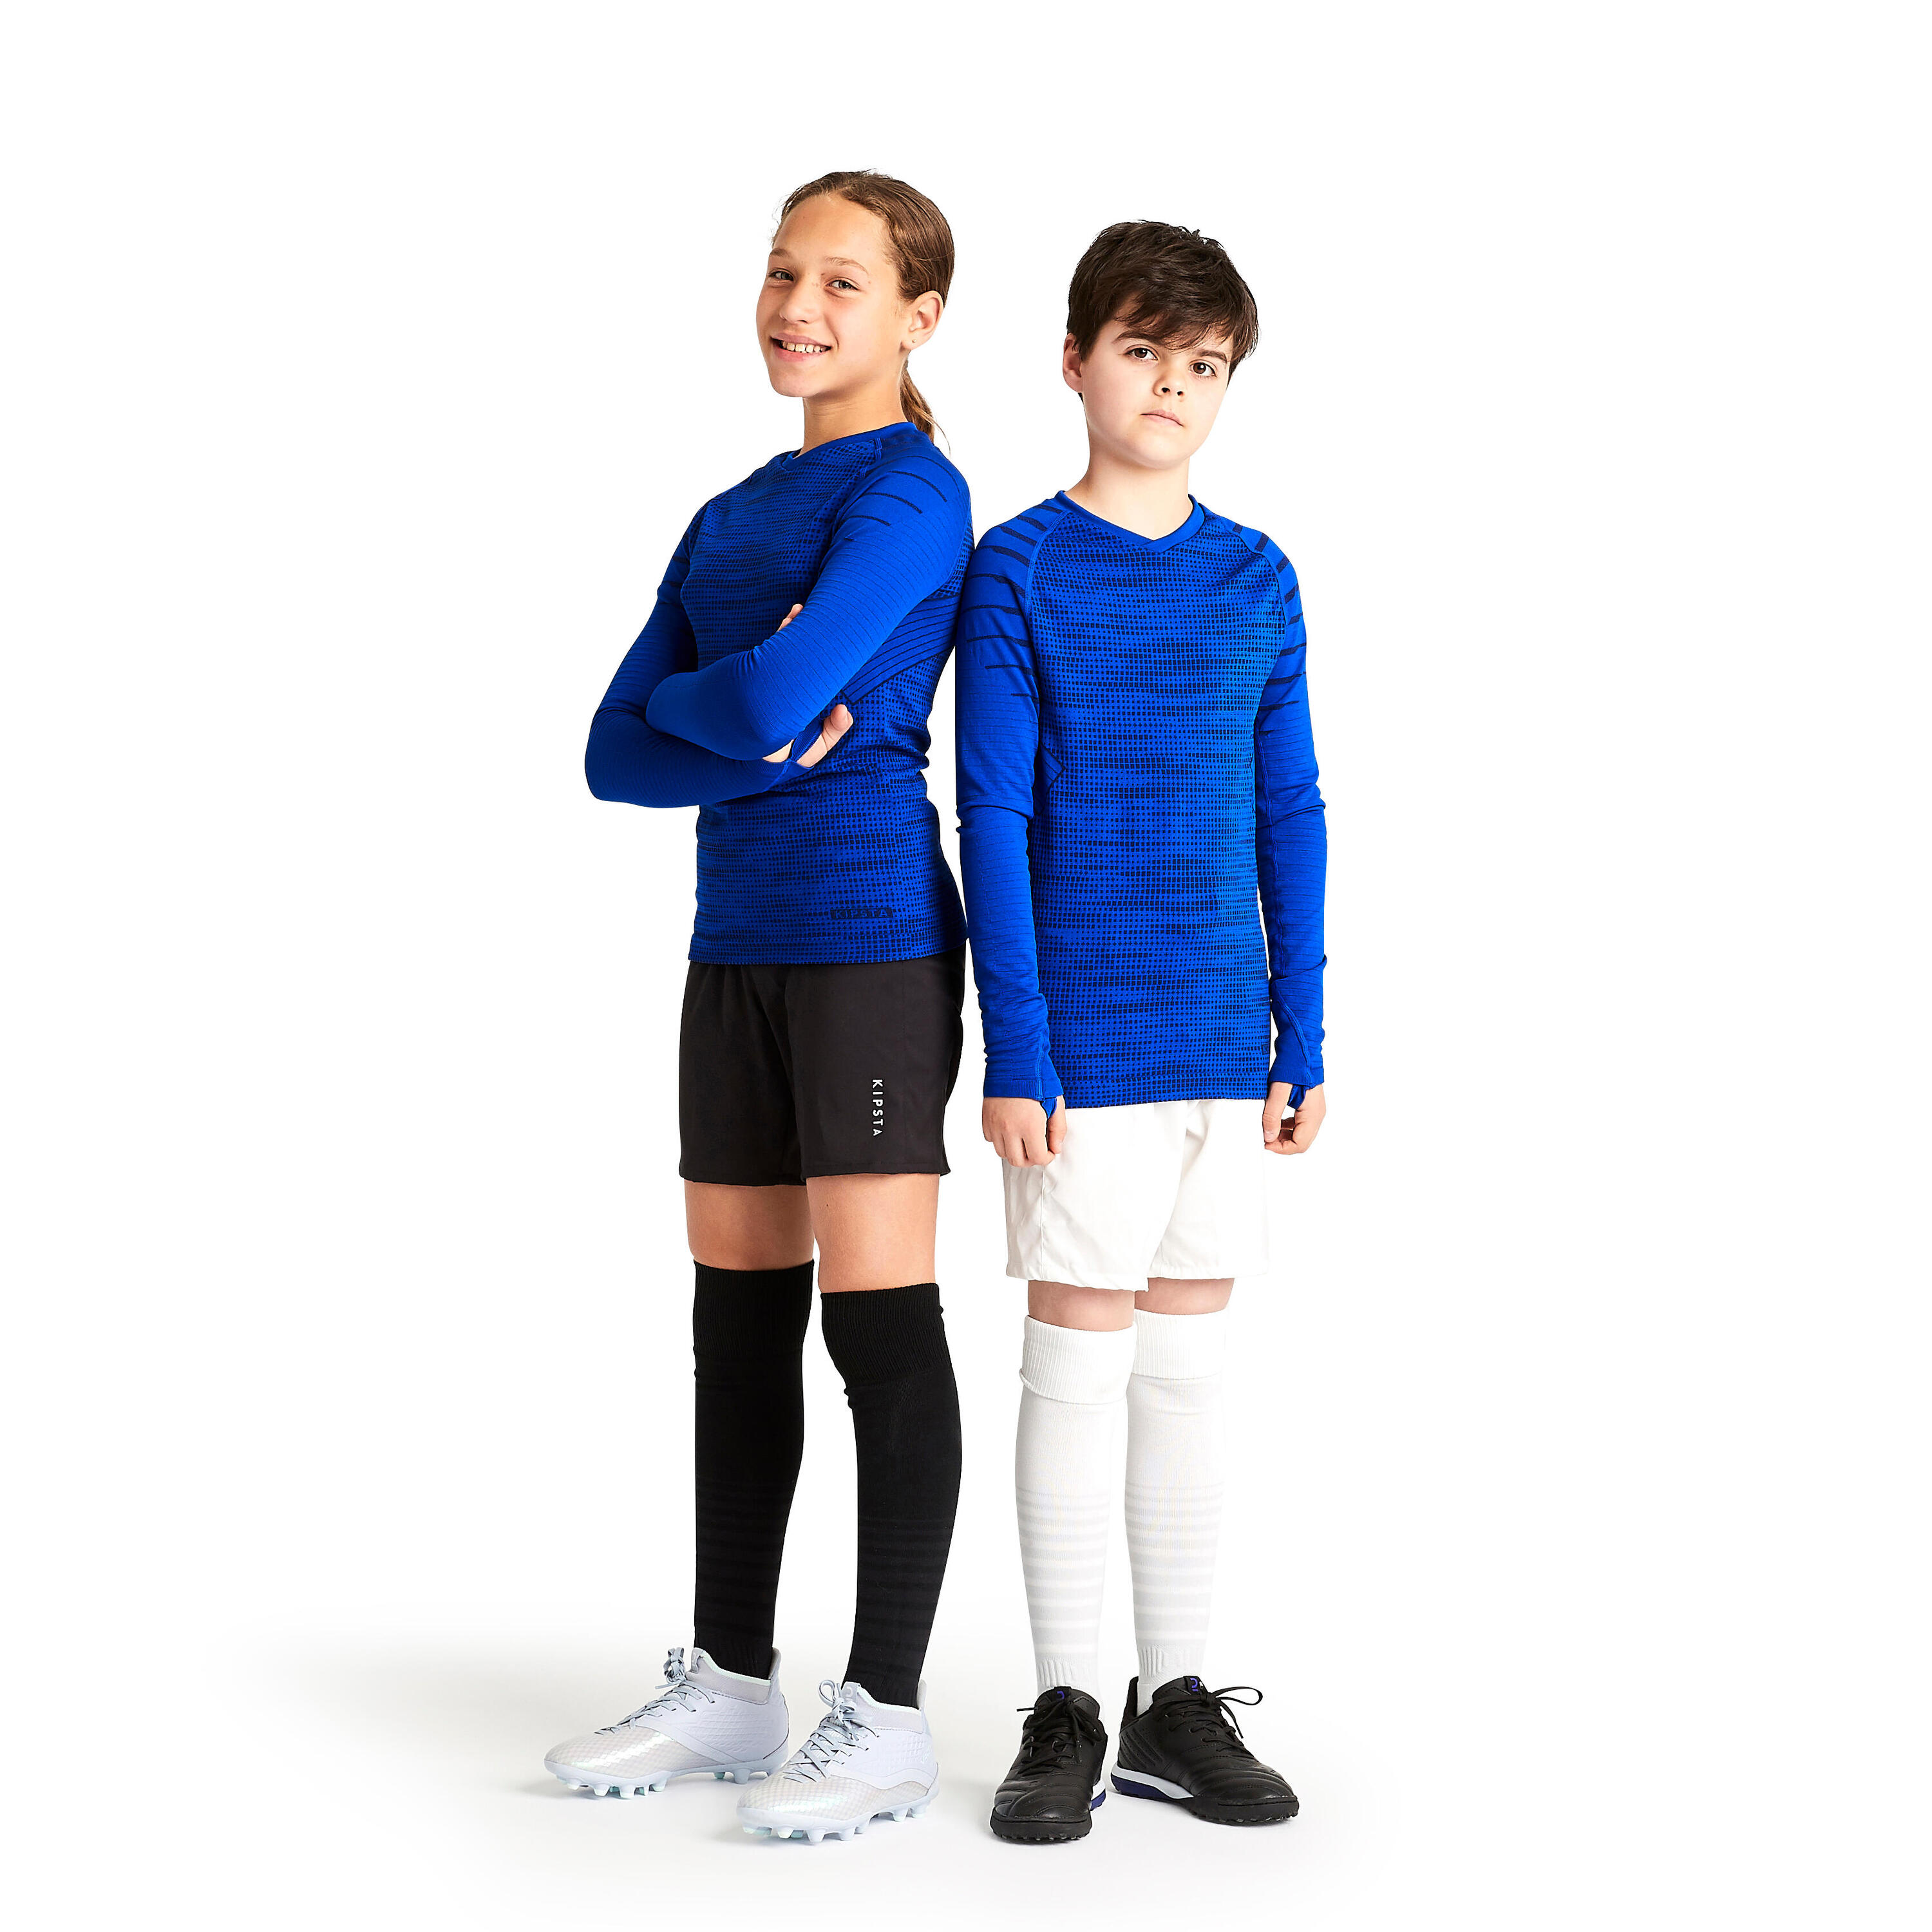 Kids' Long-Sleeved Thermal Base Layer Top Keepdry 500 - Indigo Blue 4/9